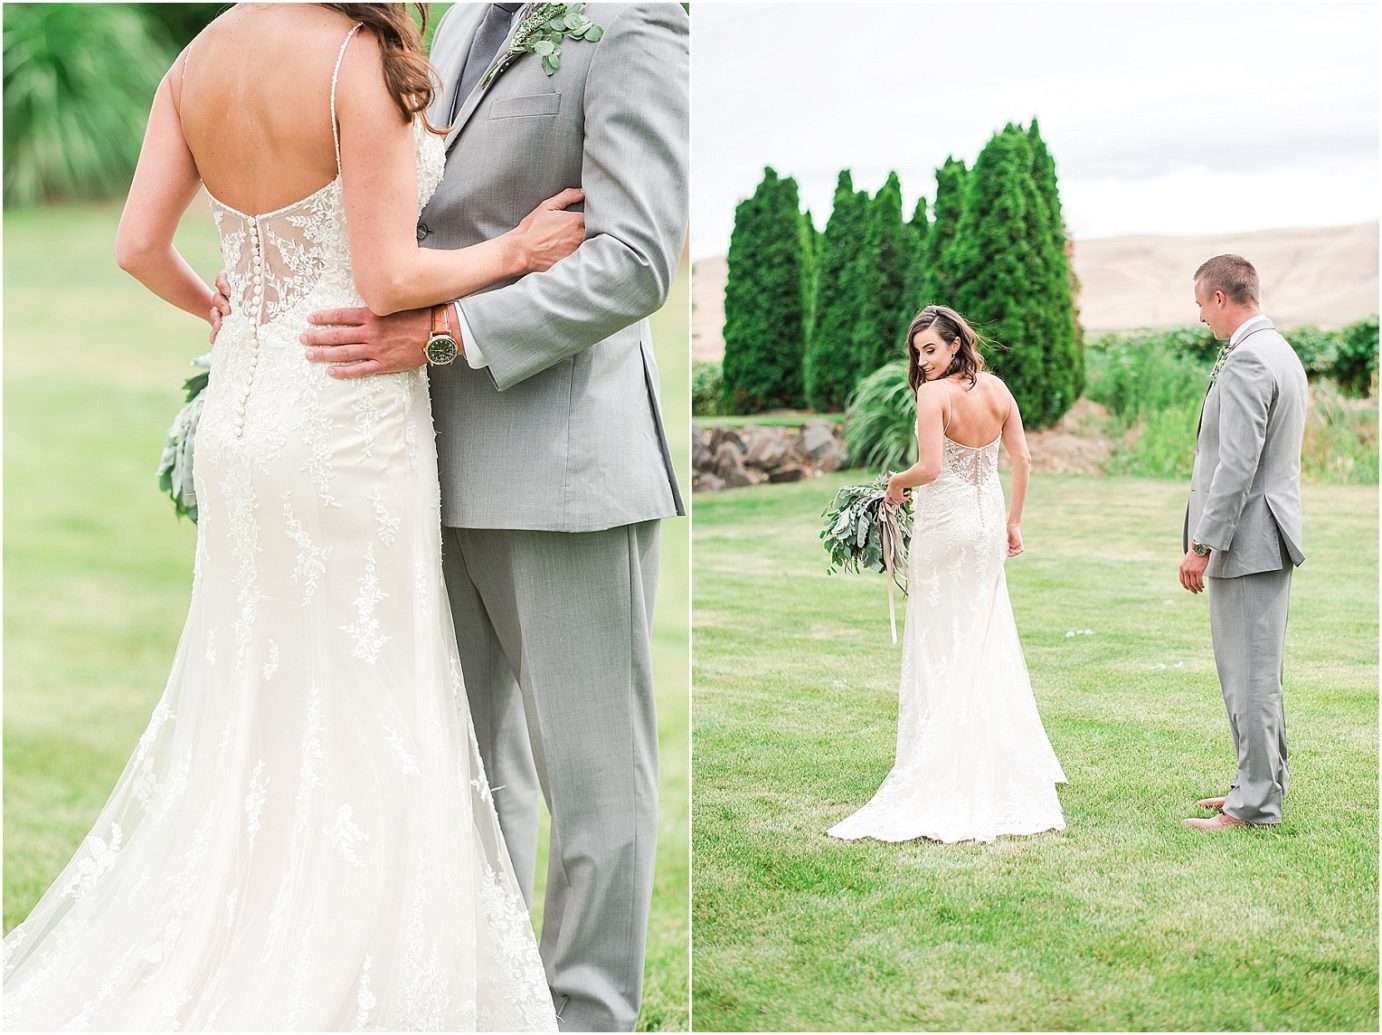 Romantic backyard wedding prosser photographer calvin and kelly first look